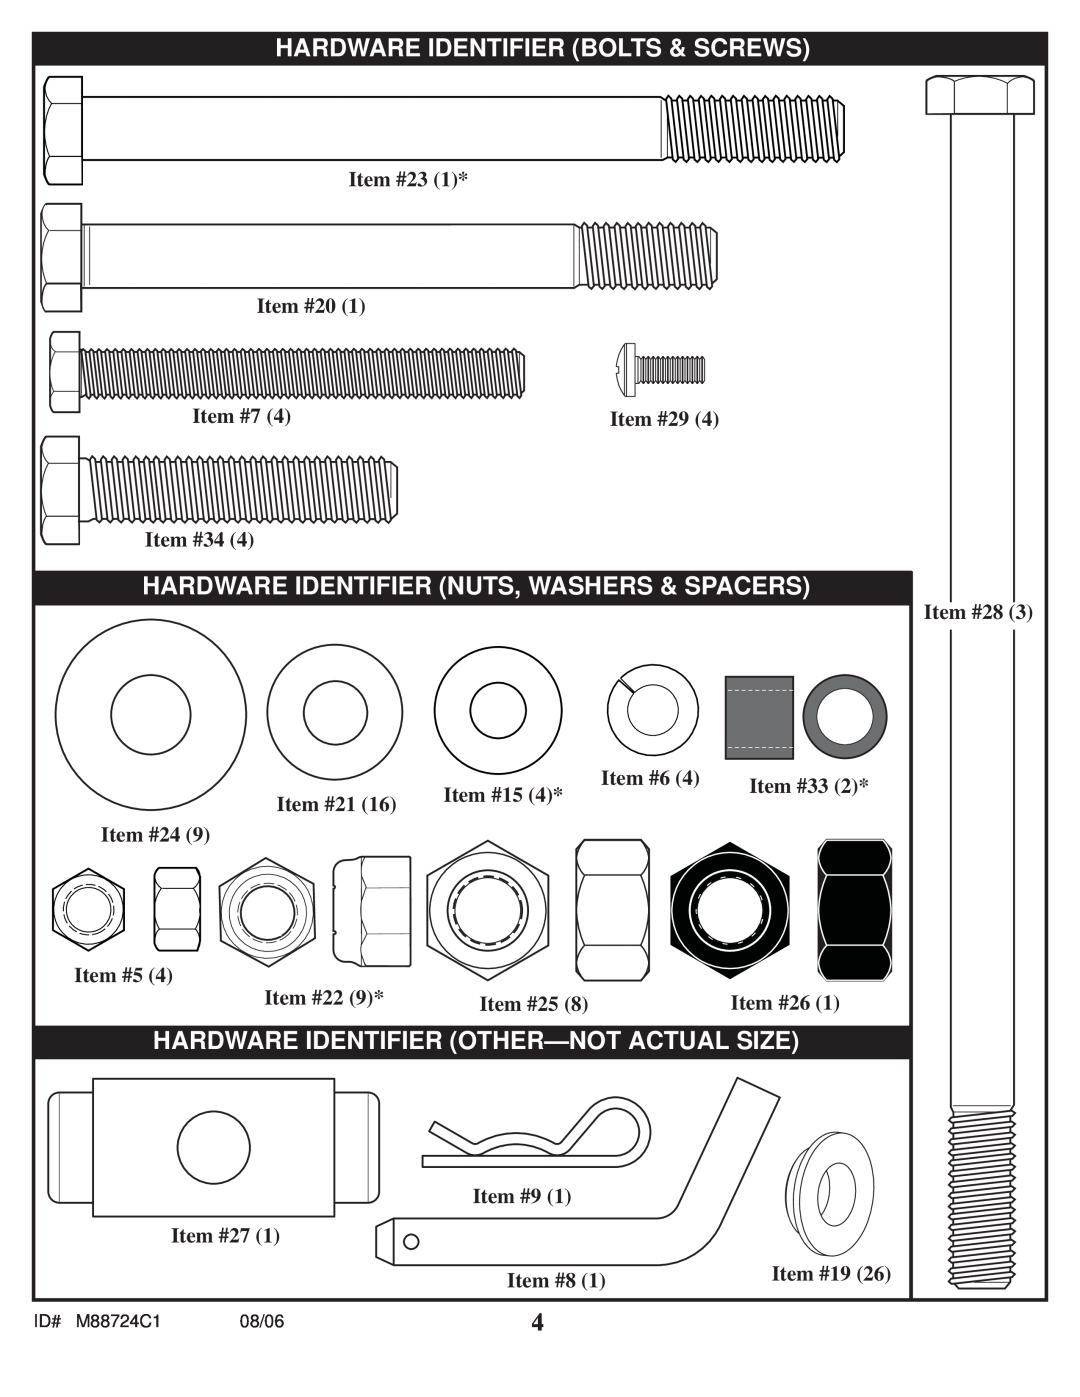 Spalding M88724C1 manual Hardware Identifier Bolts & Screws, Hardware Identifier Nuts, Washers & Spacers 